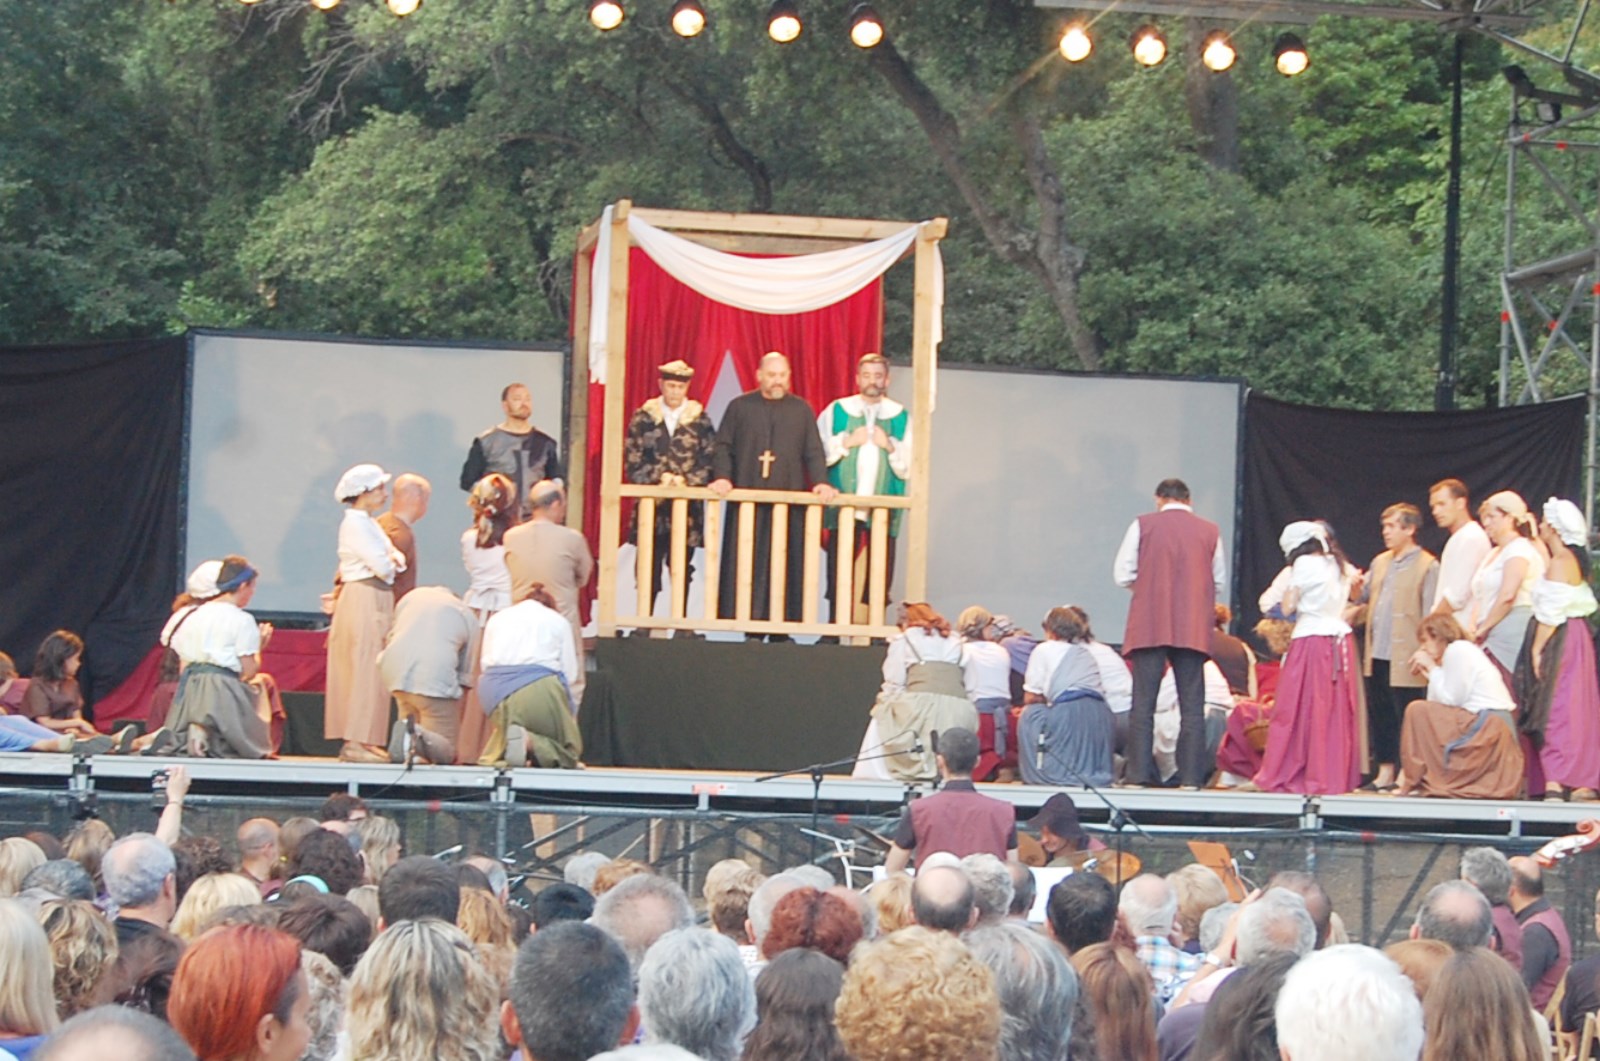 Teatre musical: "El retaule del flautista", dissabte 13 i diumenge 14 de juliol